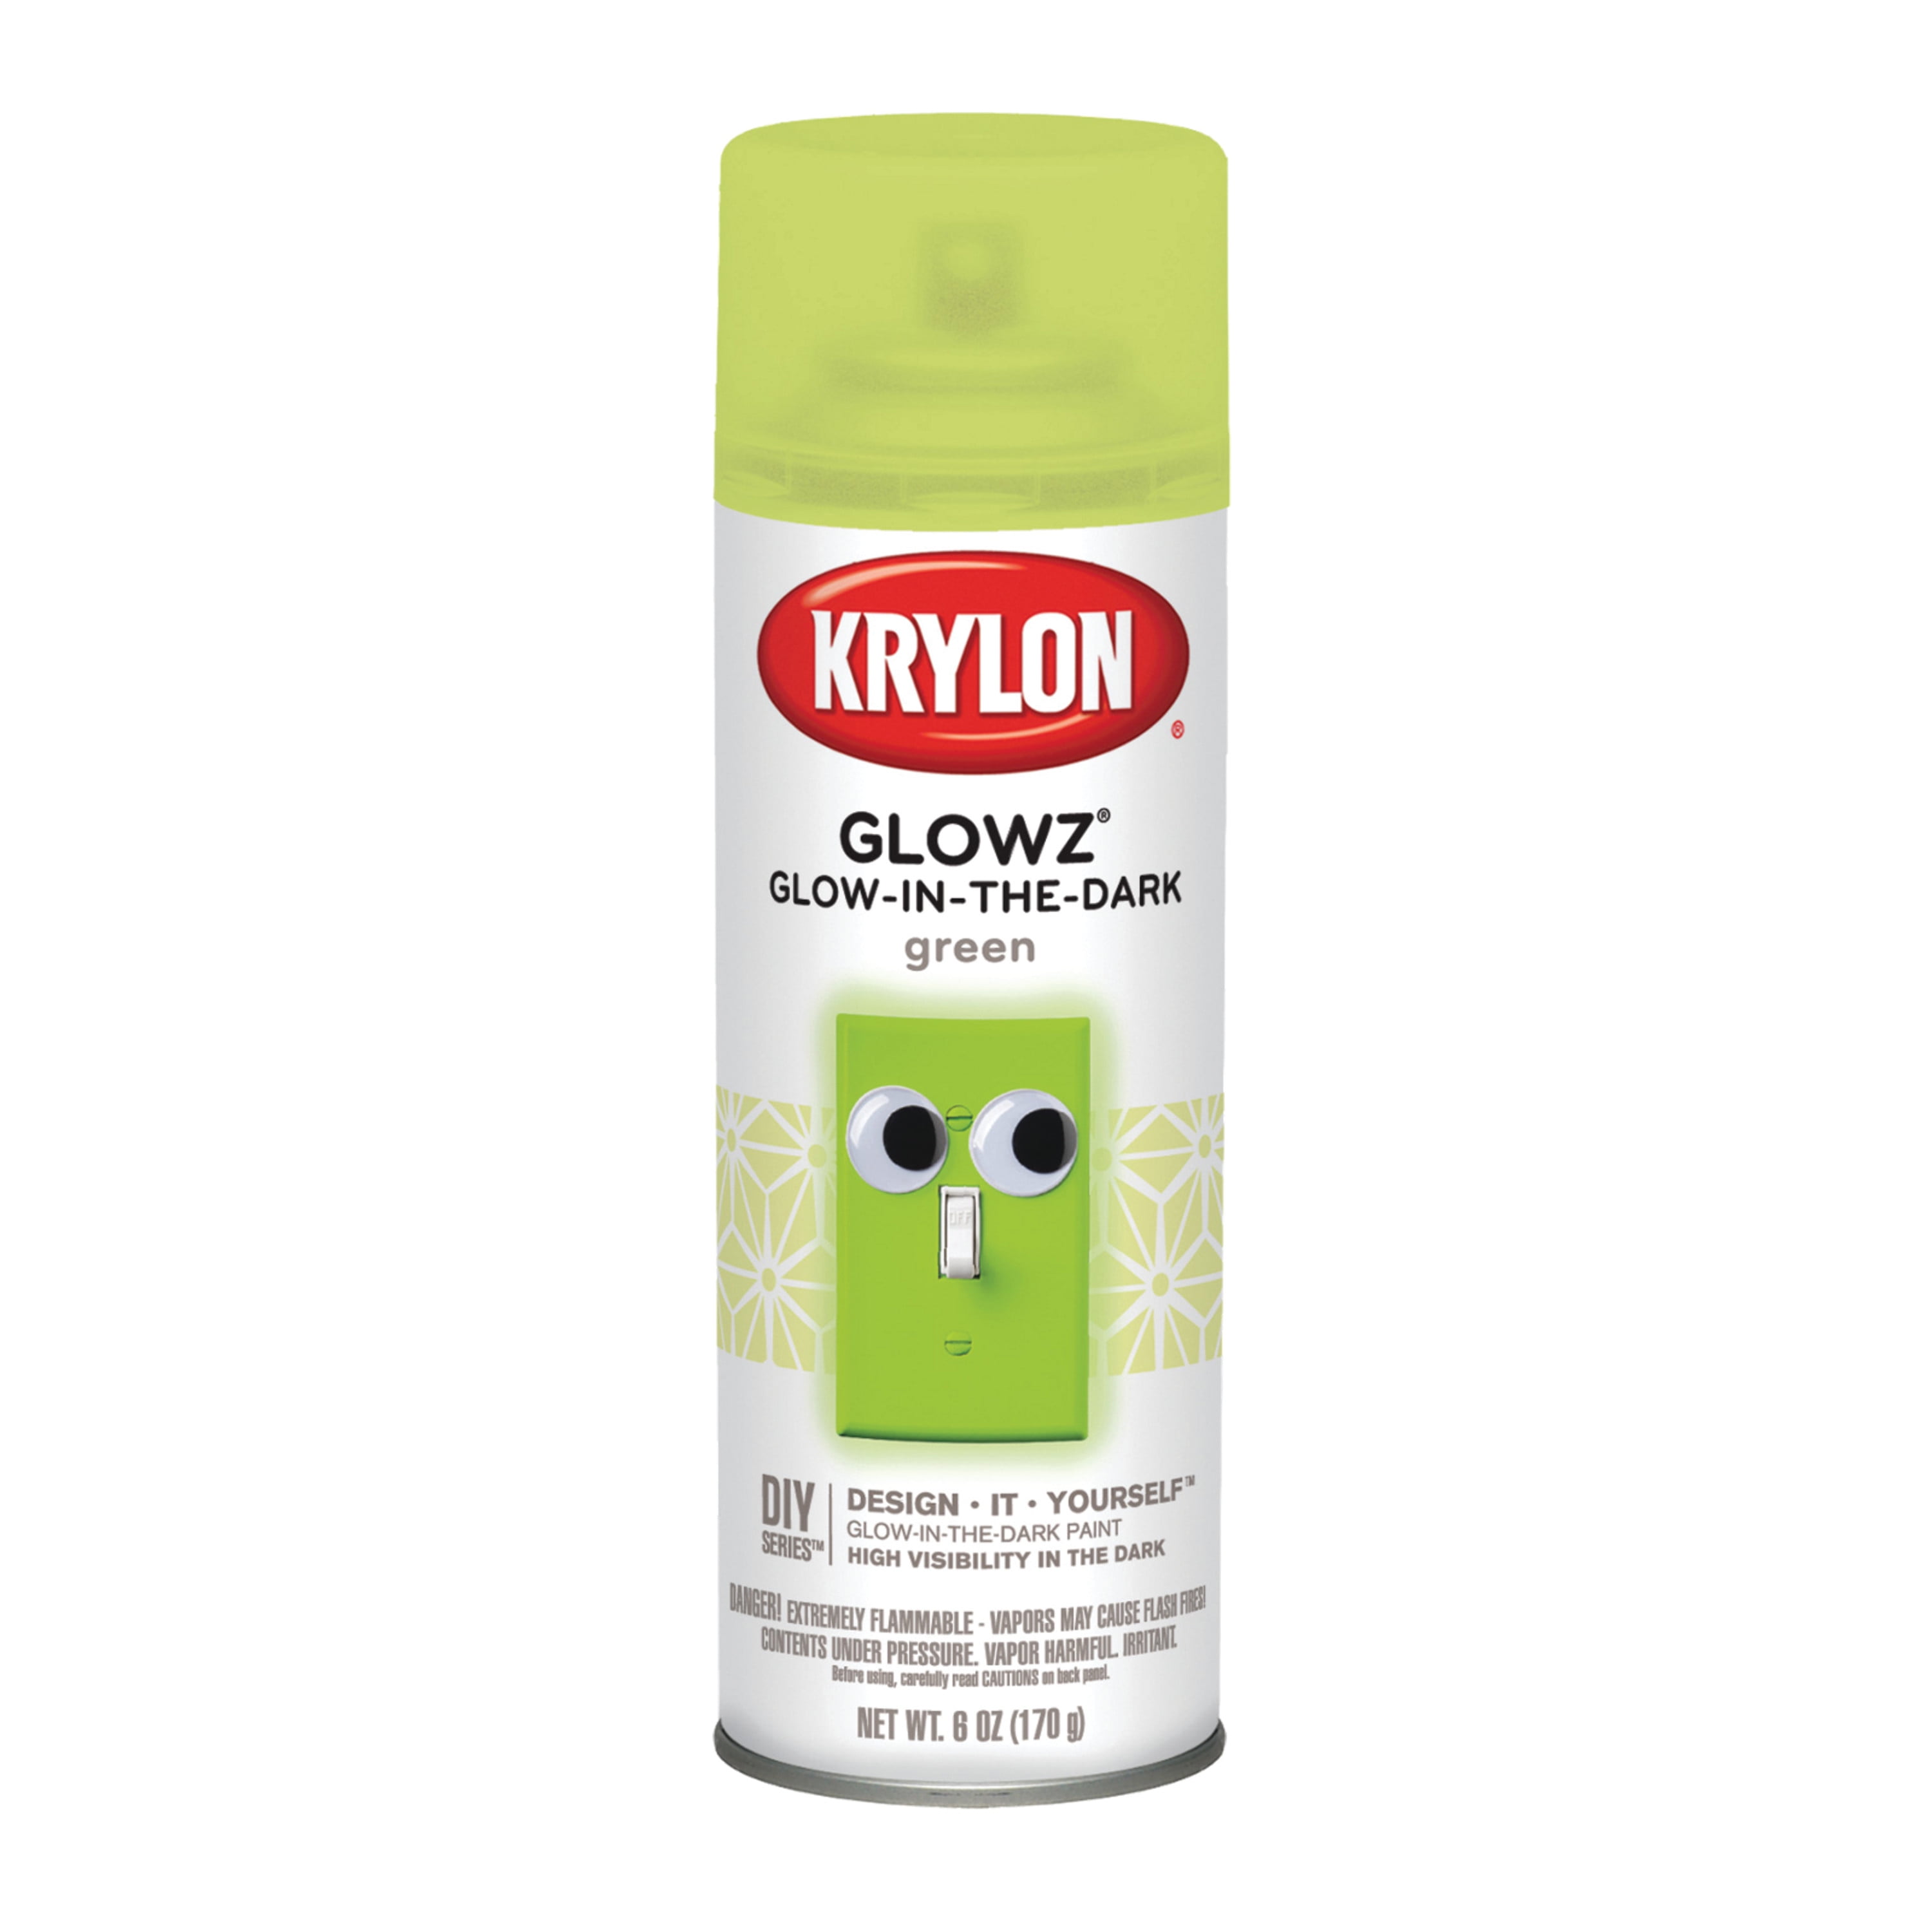 Krylon 3106 Aerosol Paint, 11 oz, Green, Pack of 1